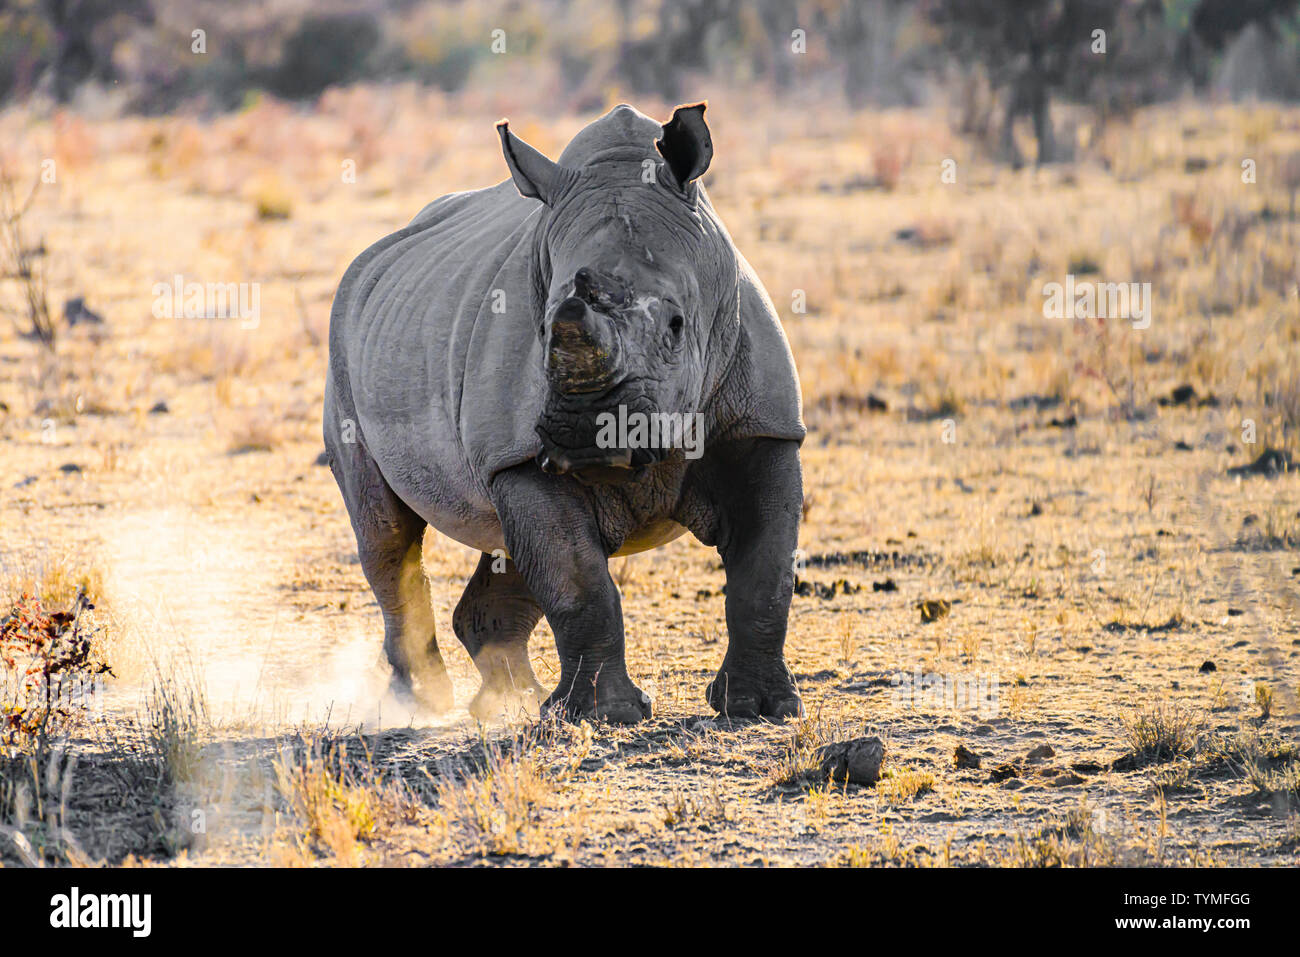 An agitated white rhino kicks up dust in Etosha National Park, Namibia Stock Photo